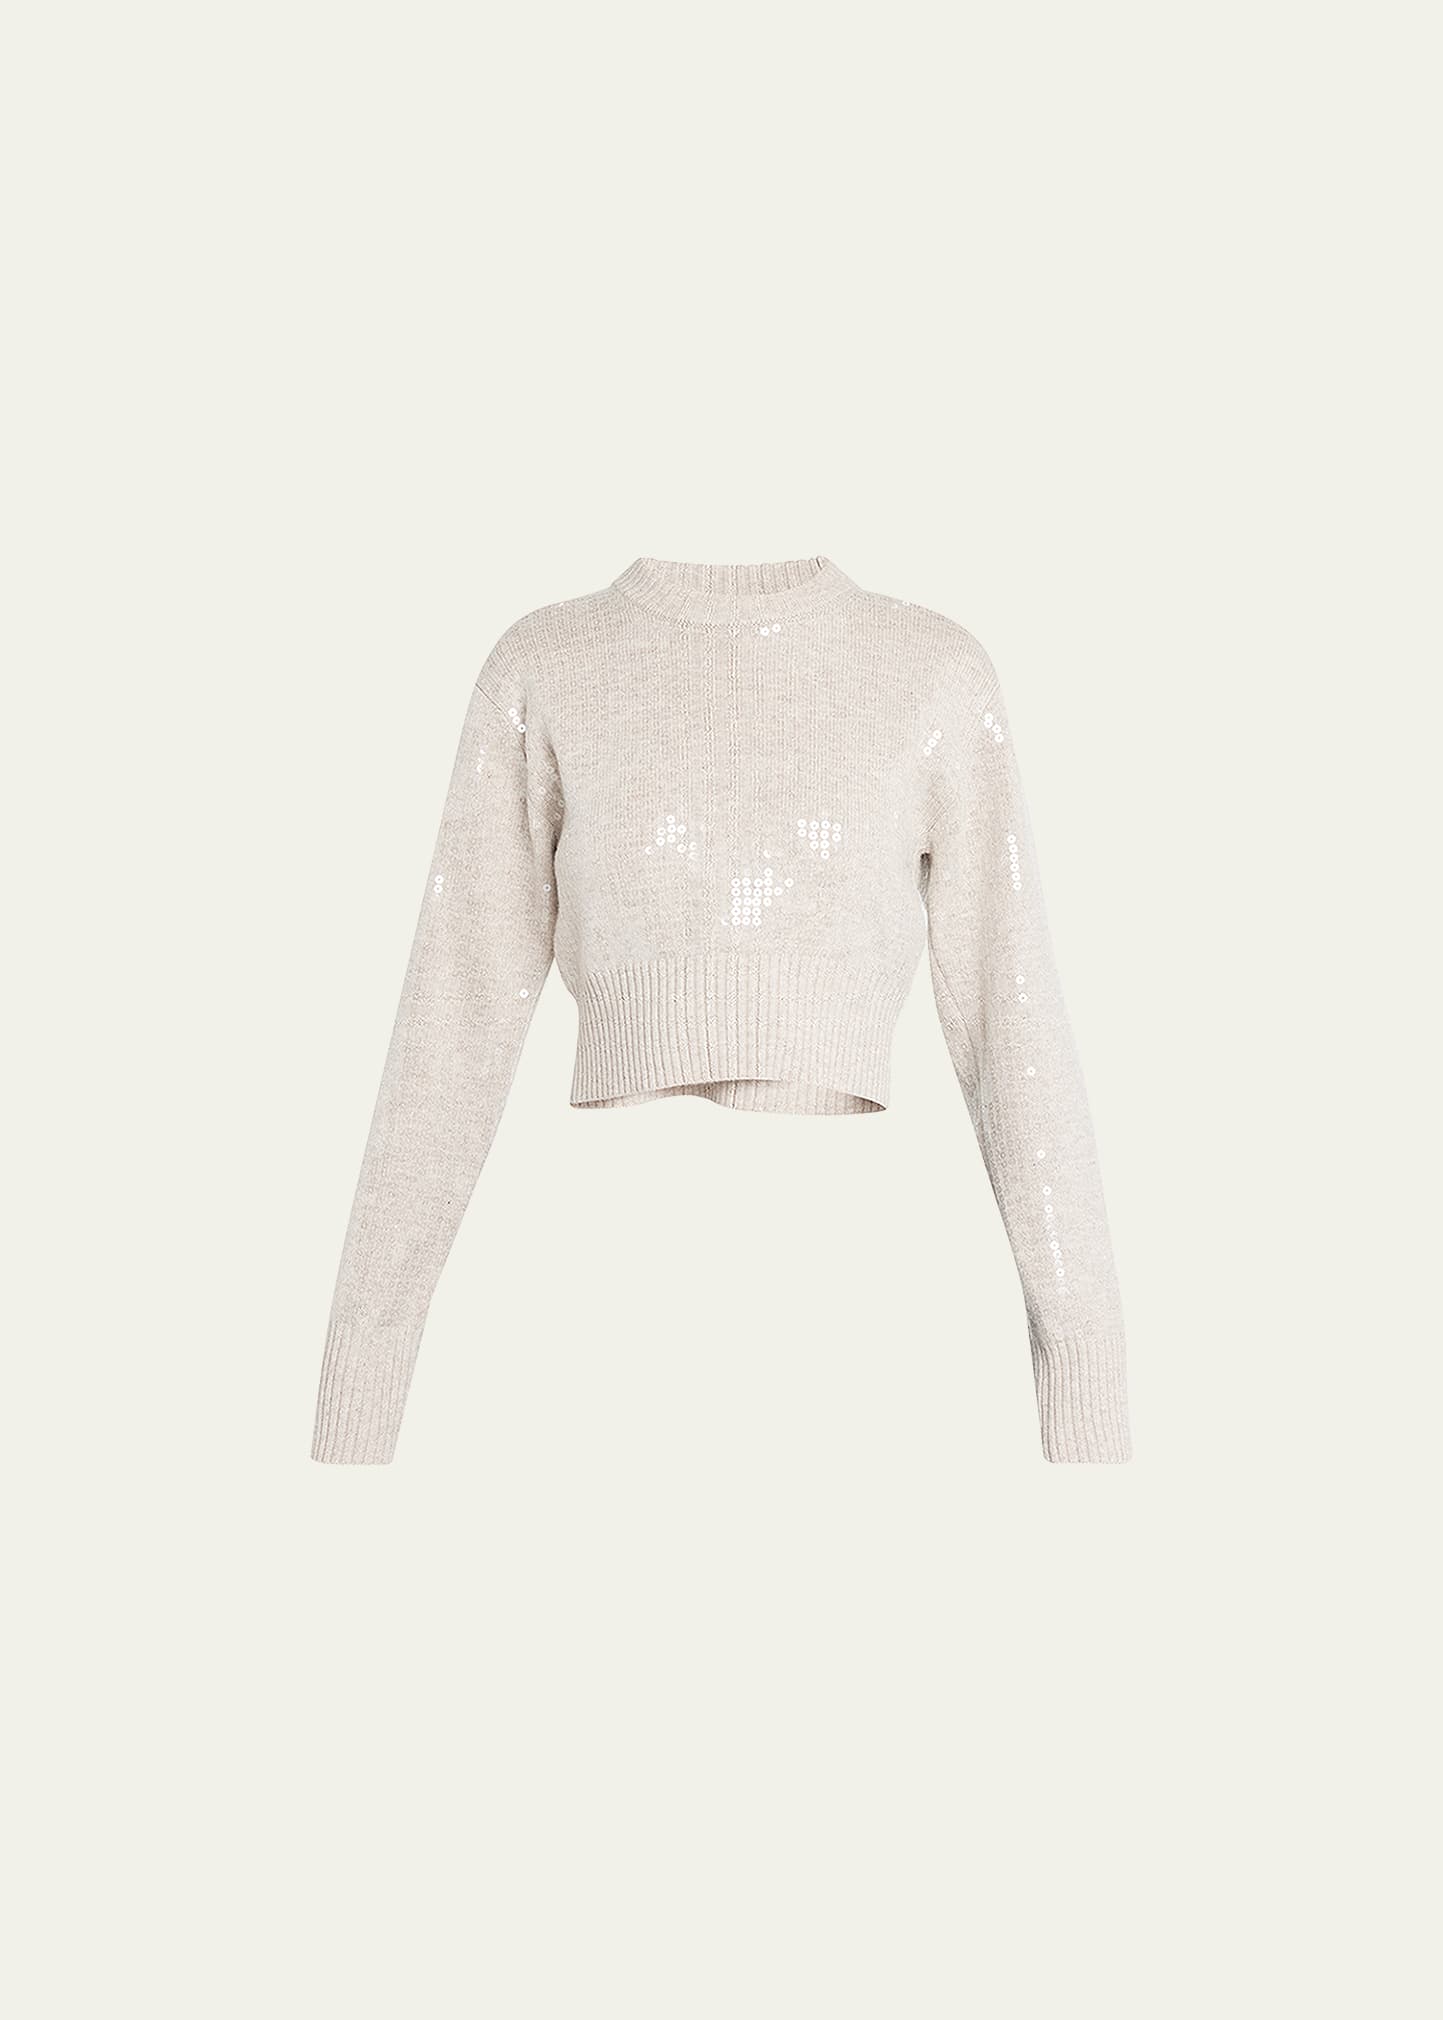 Camilla Cashmere Embellished Sweater